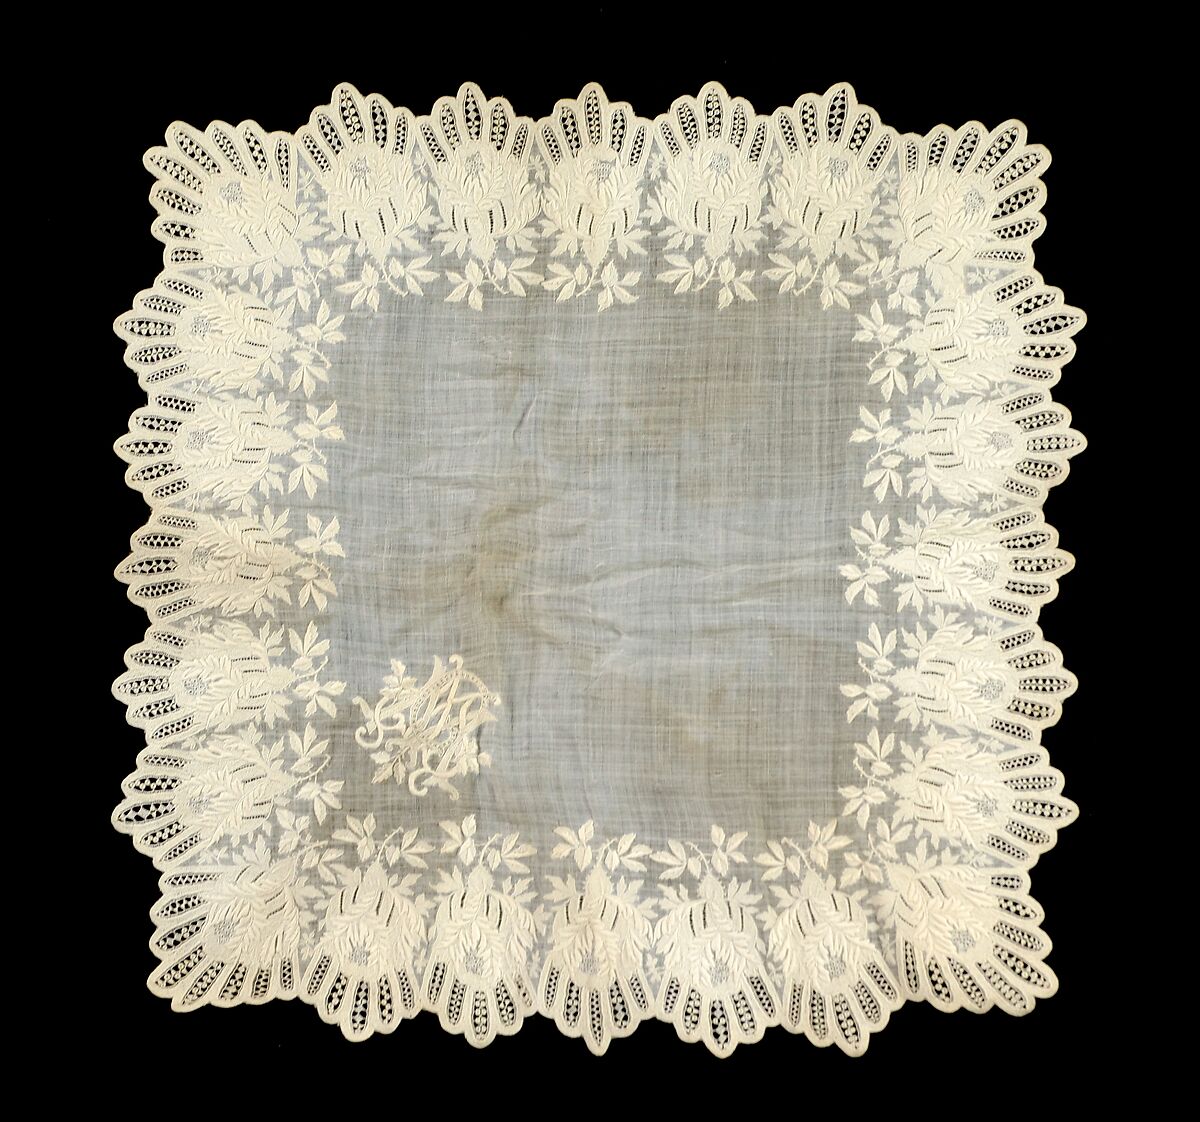 Handkerchief, Cotton, possibly Swiss 